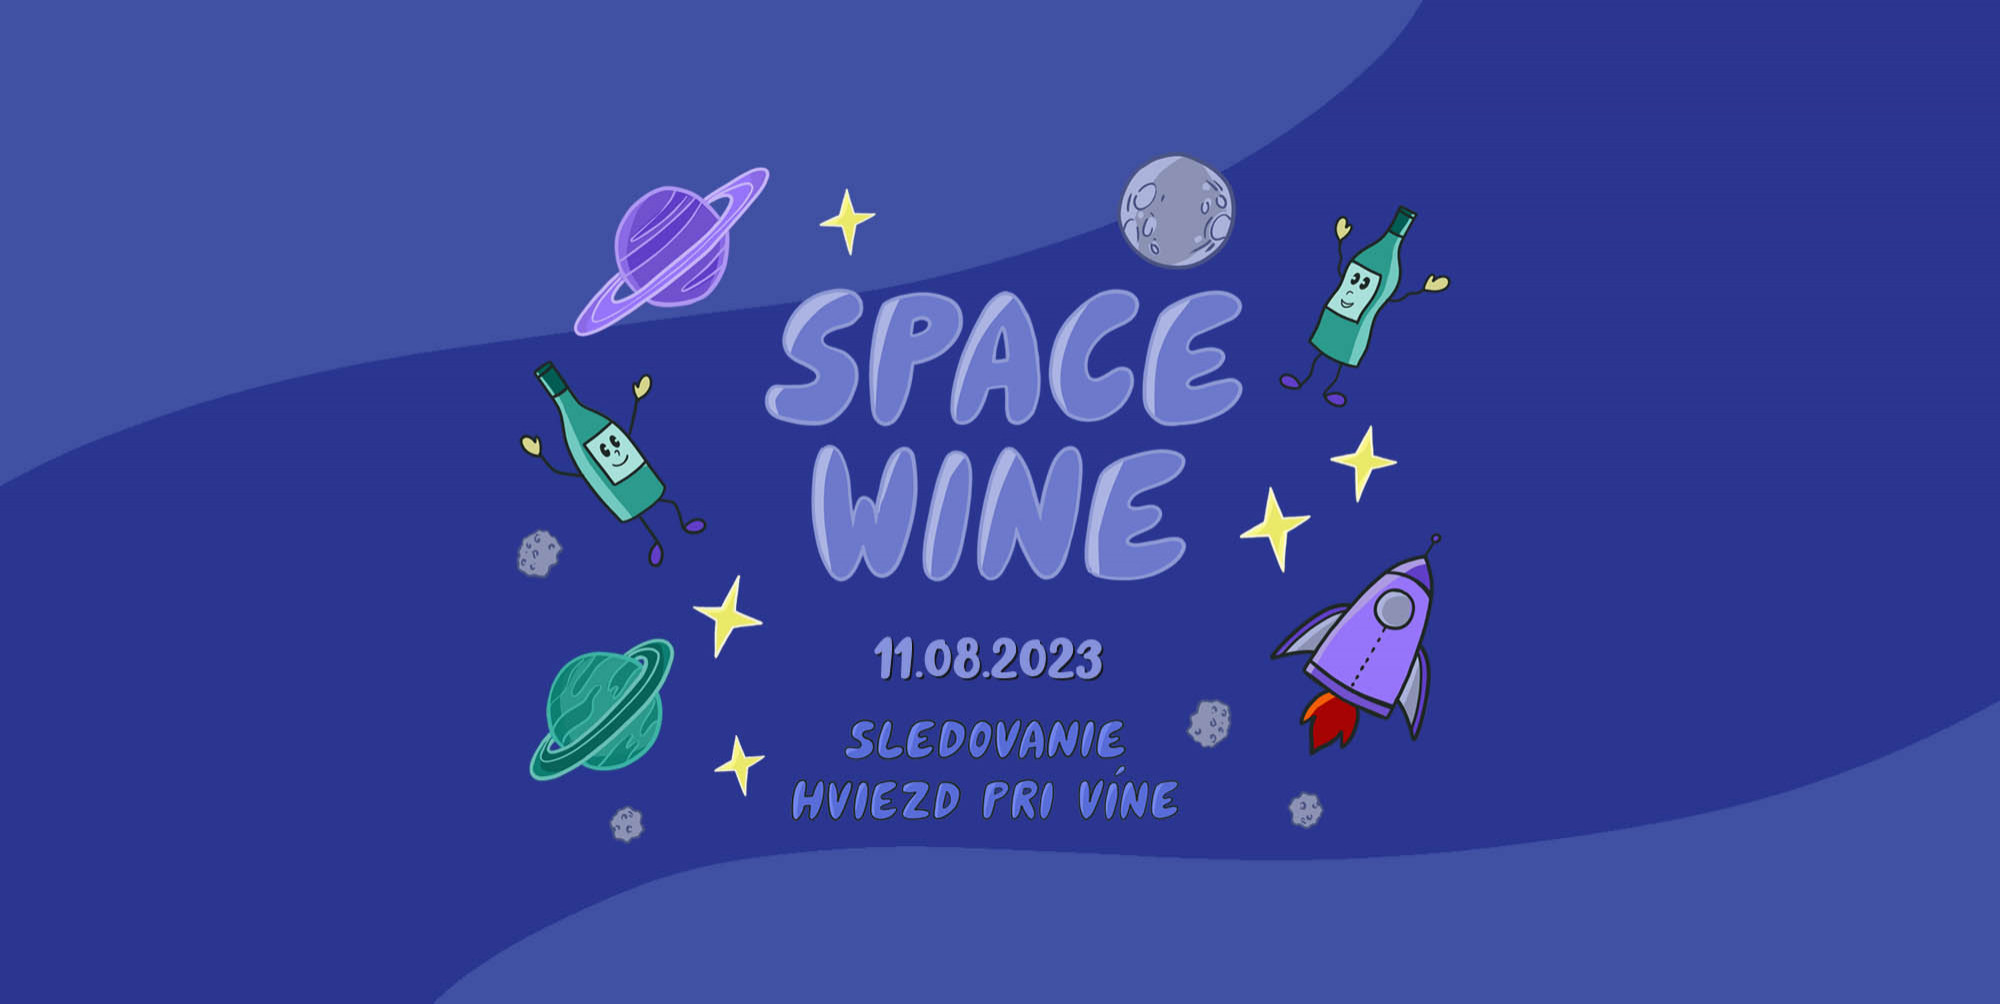 SPACE WINE 2023